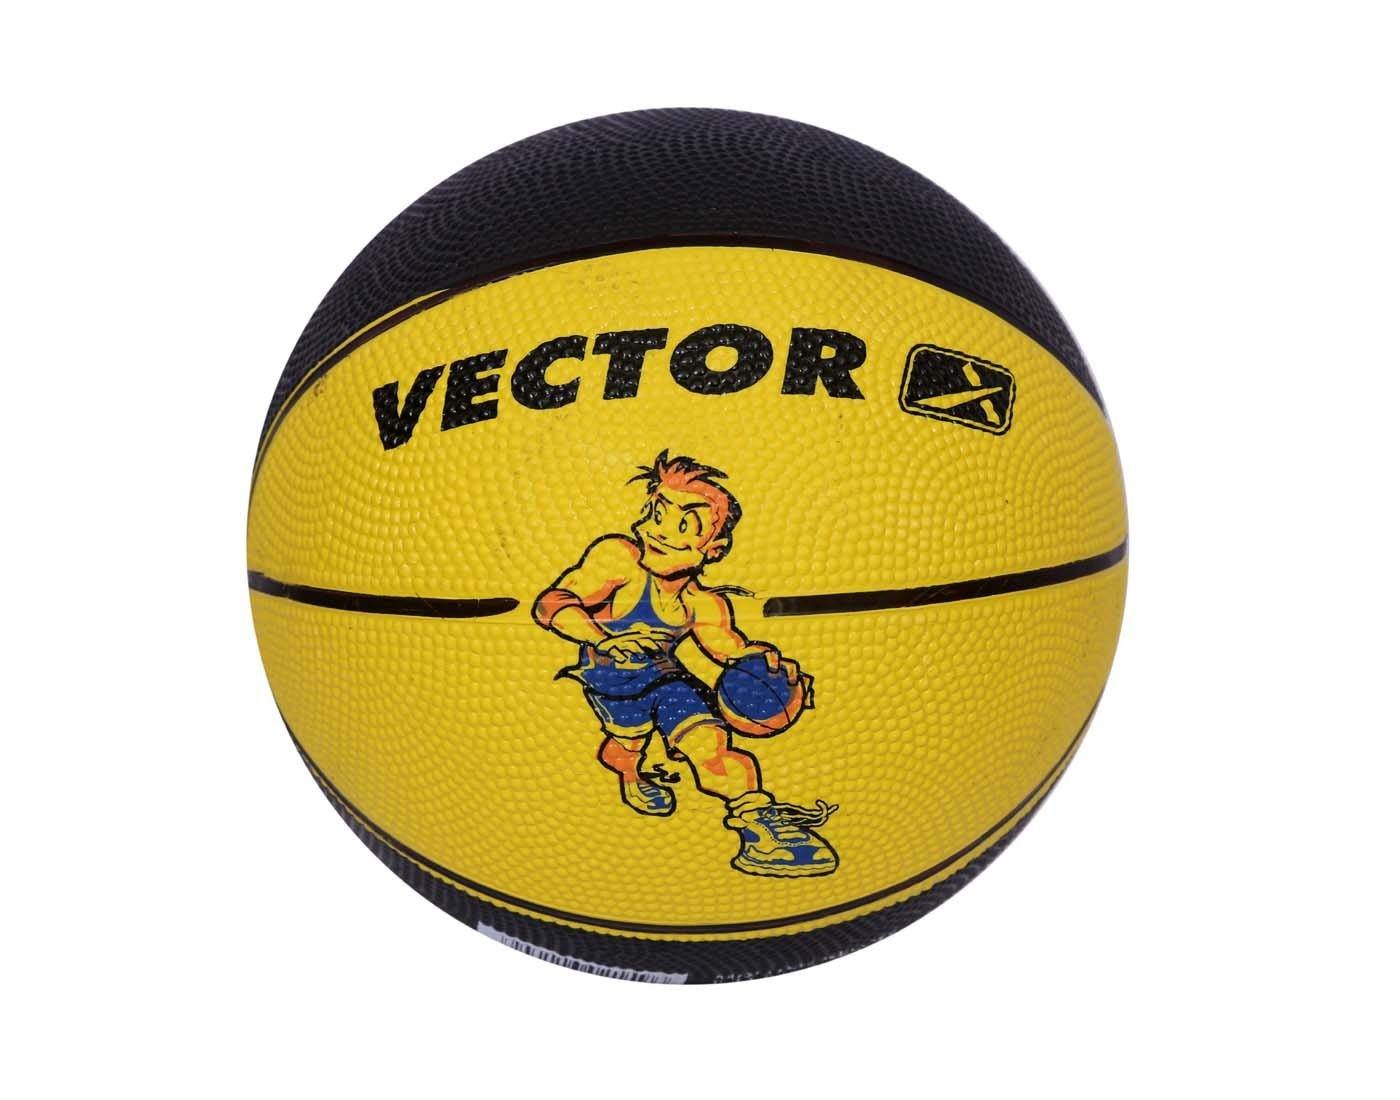 Vector X Toon Basketball, Men's Size 3 Yellow/Black - Best Price online Prokicksports.com